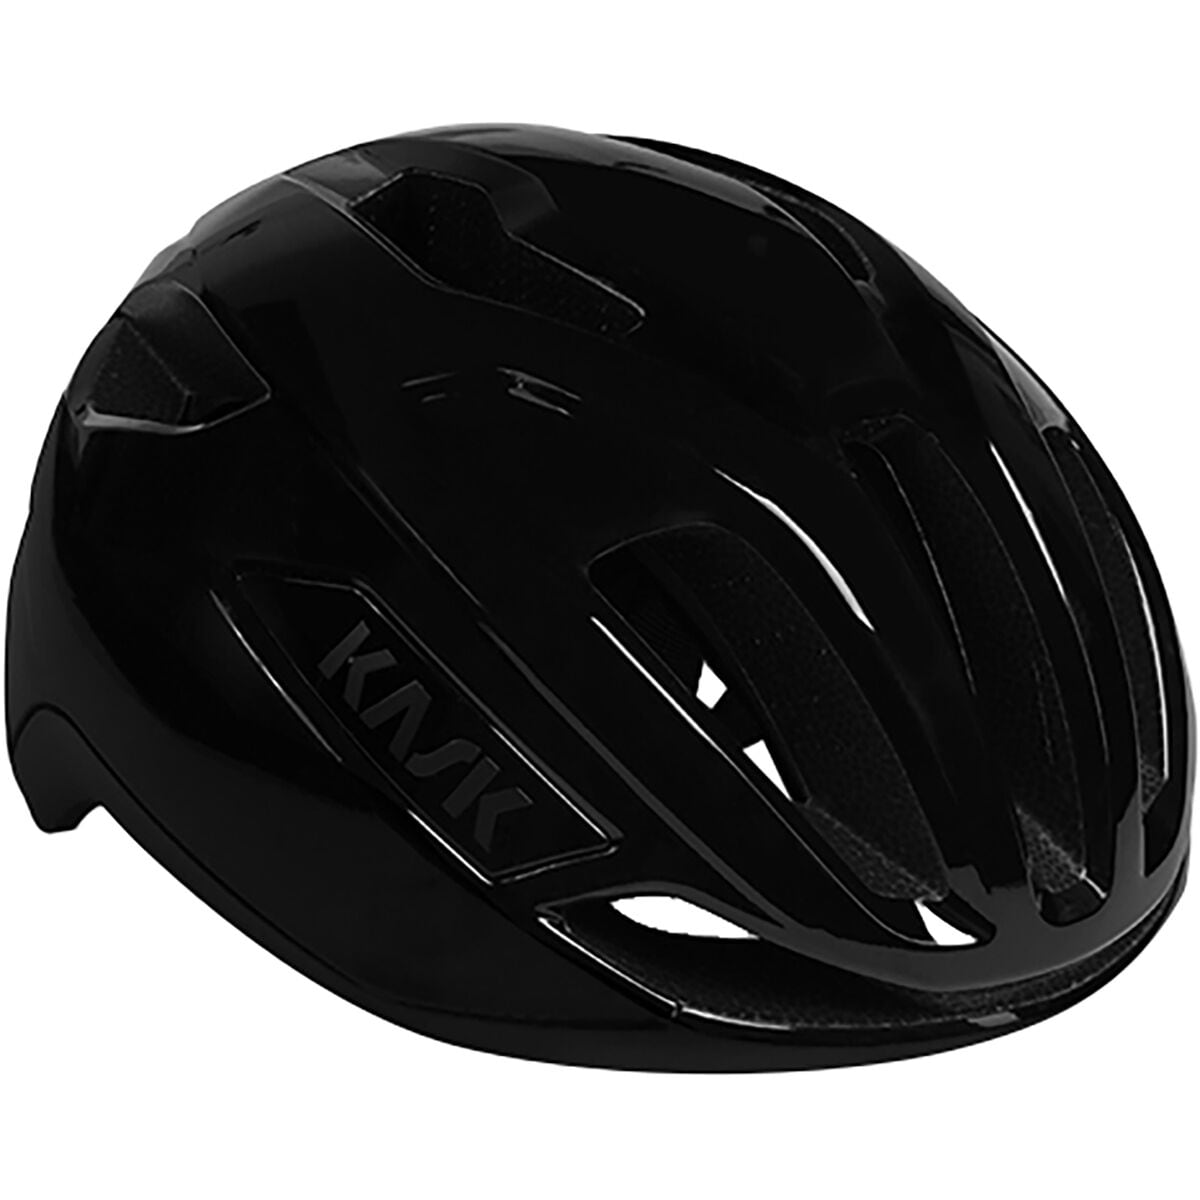 Kask Protone Helmet review